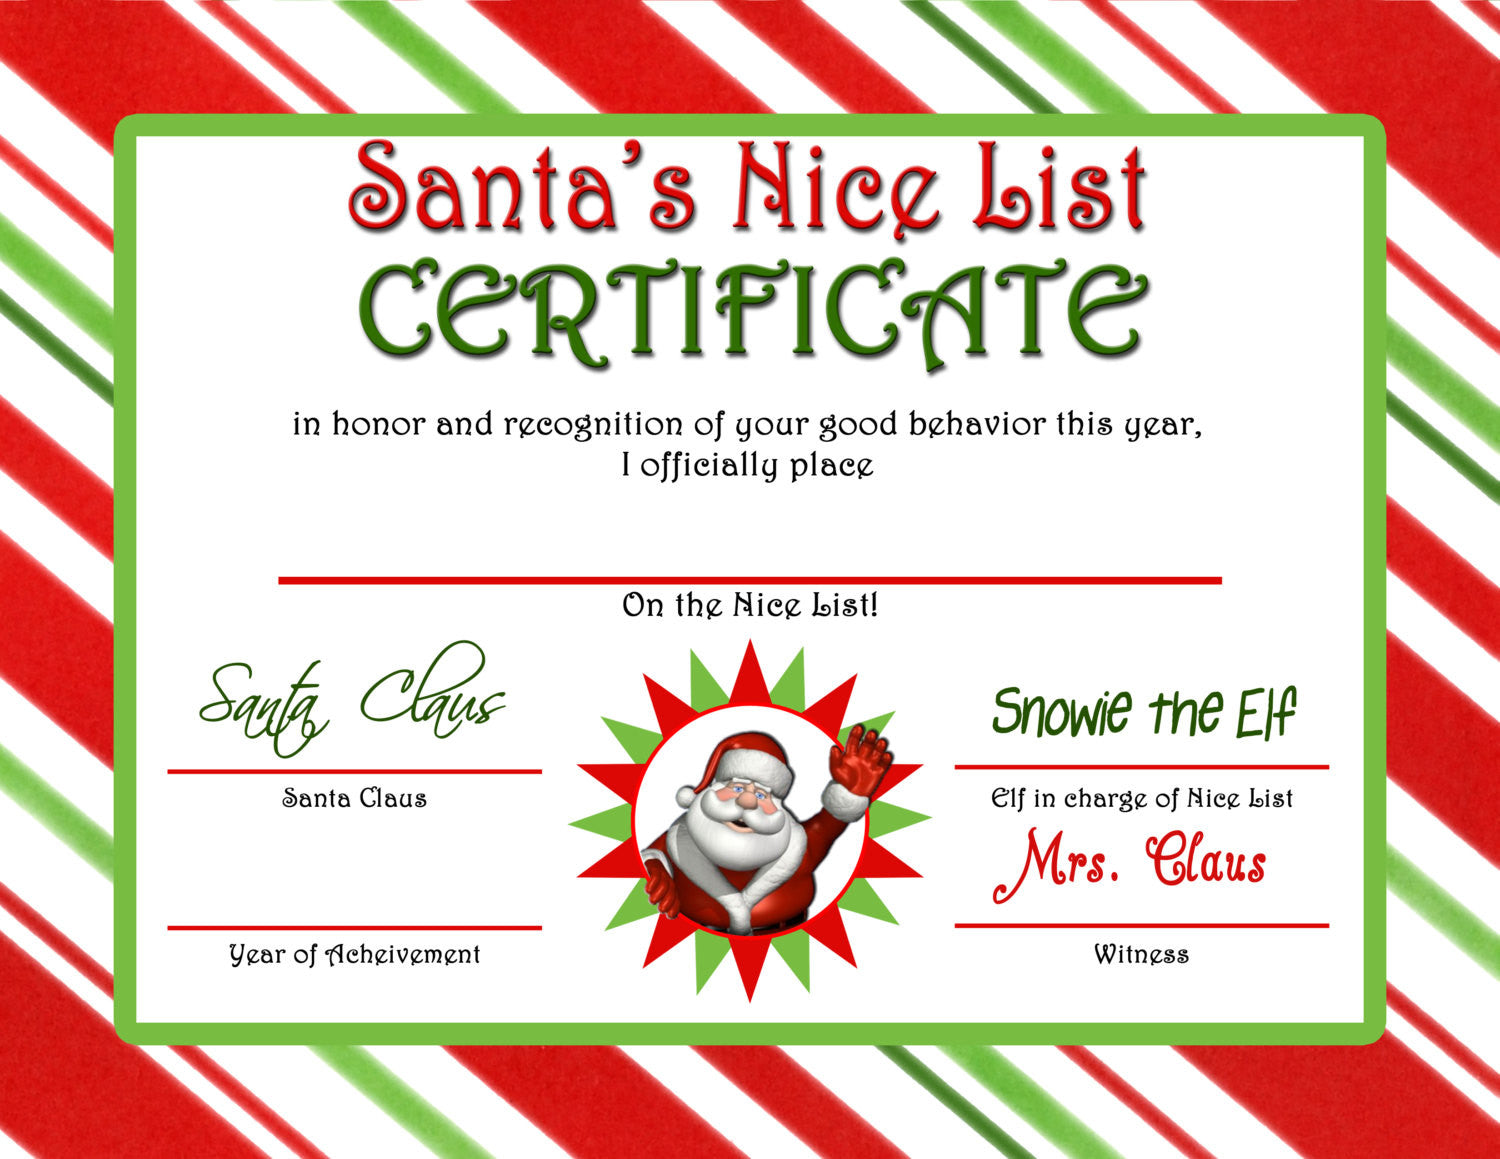 Letter From Santa & Nice List Certificate Instant Download JPEG (M10